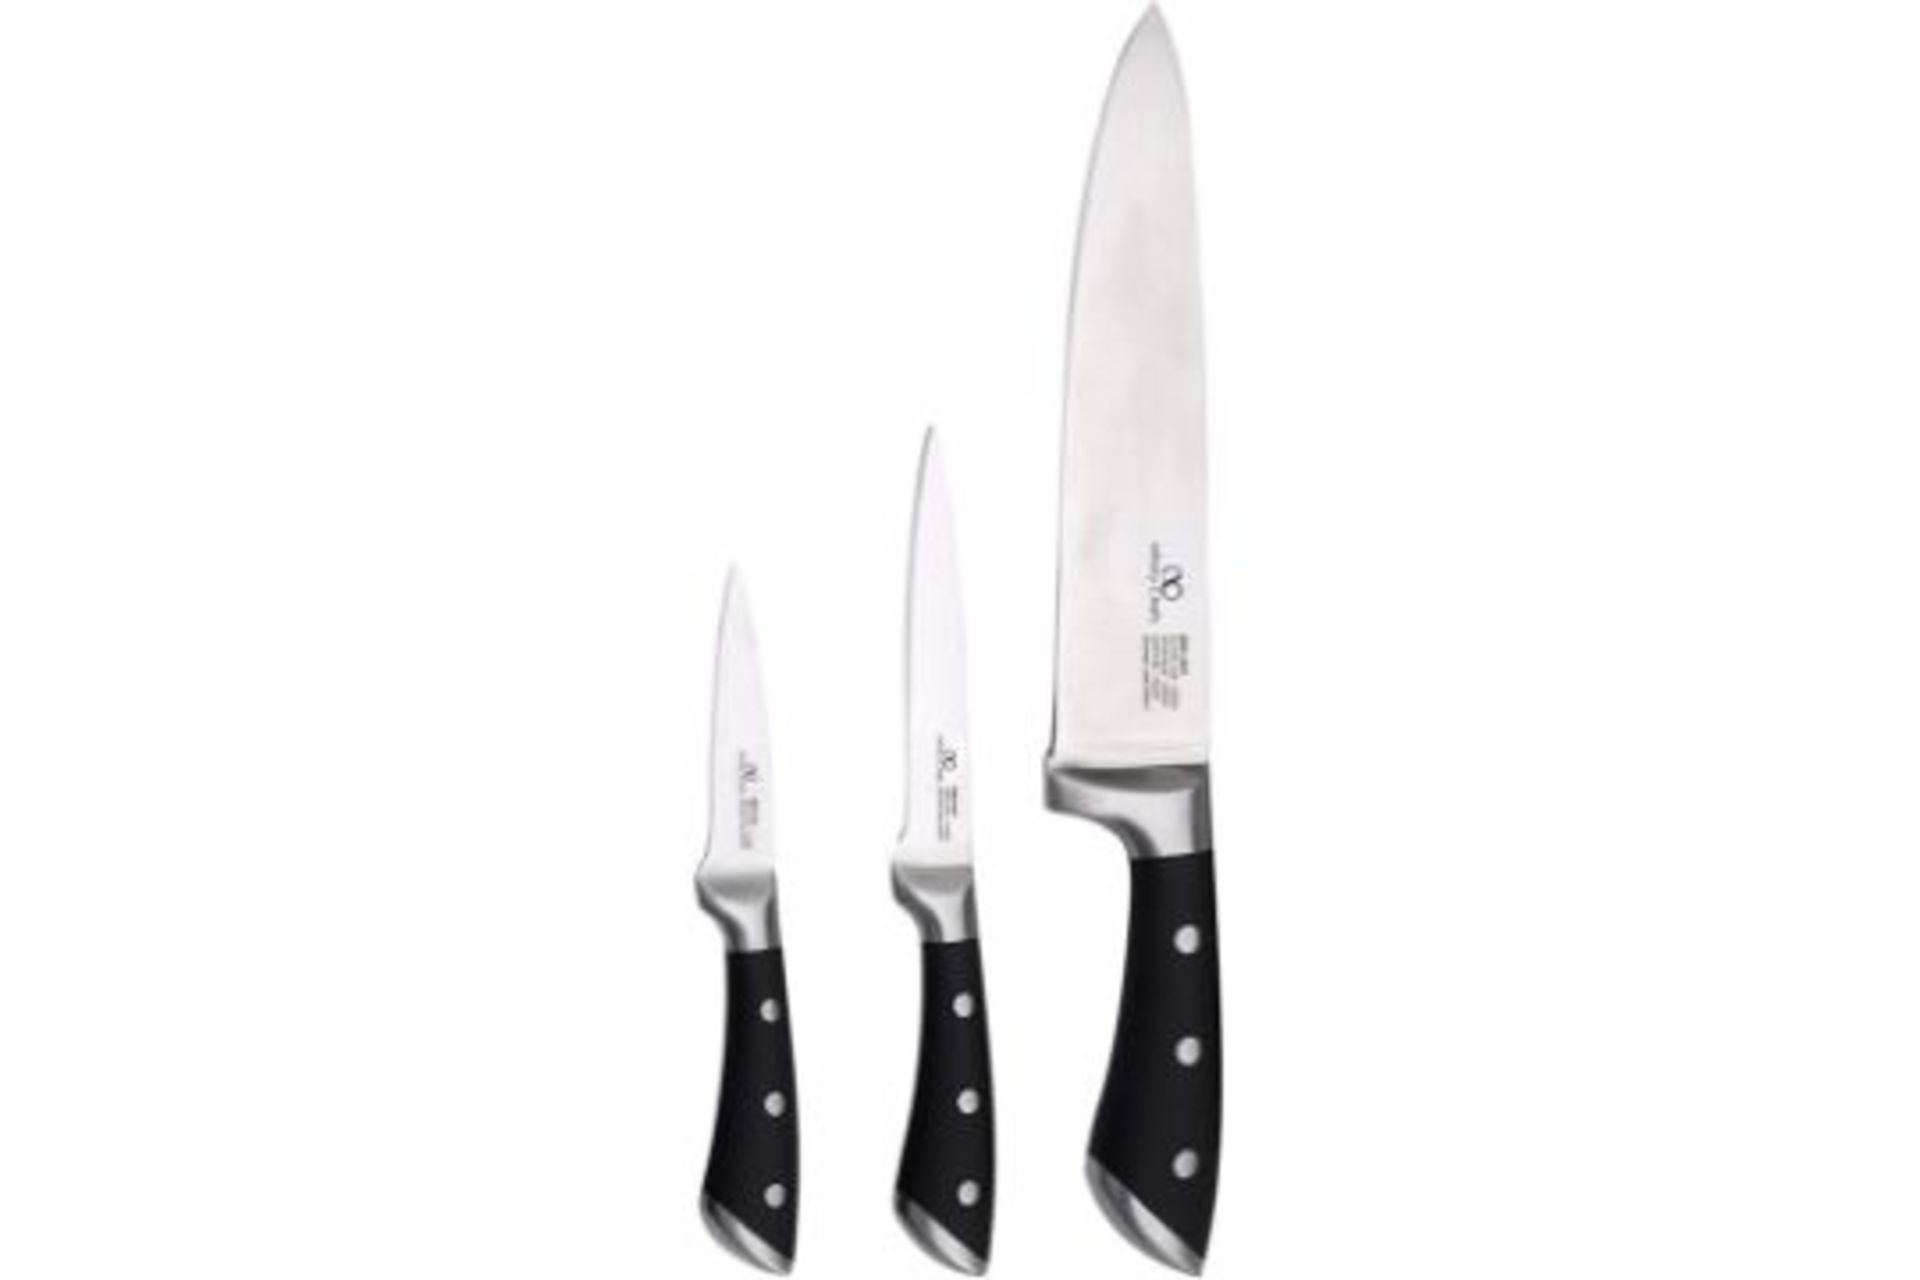 Brand New Bergner Infinity Chefs Vita 3-Piece Knife Set - RRP £22.